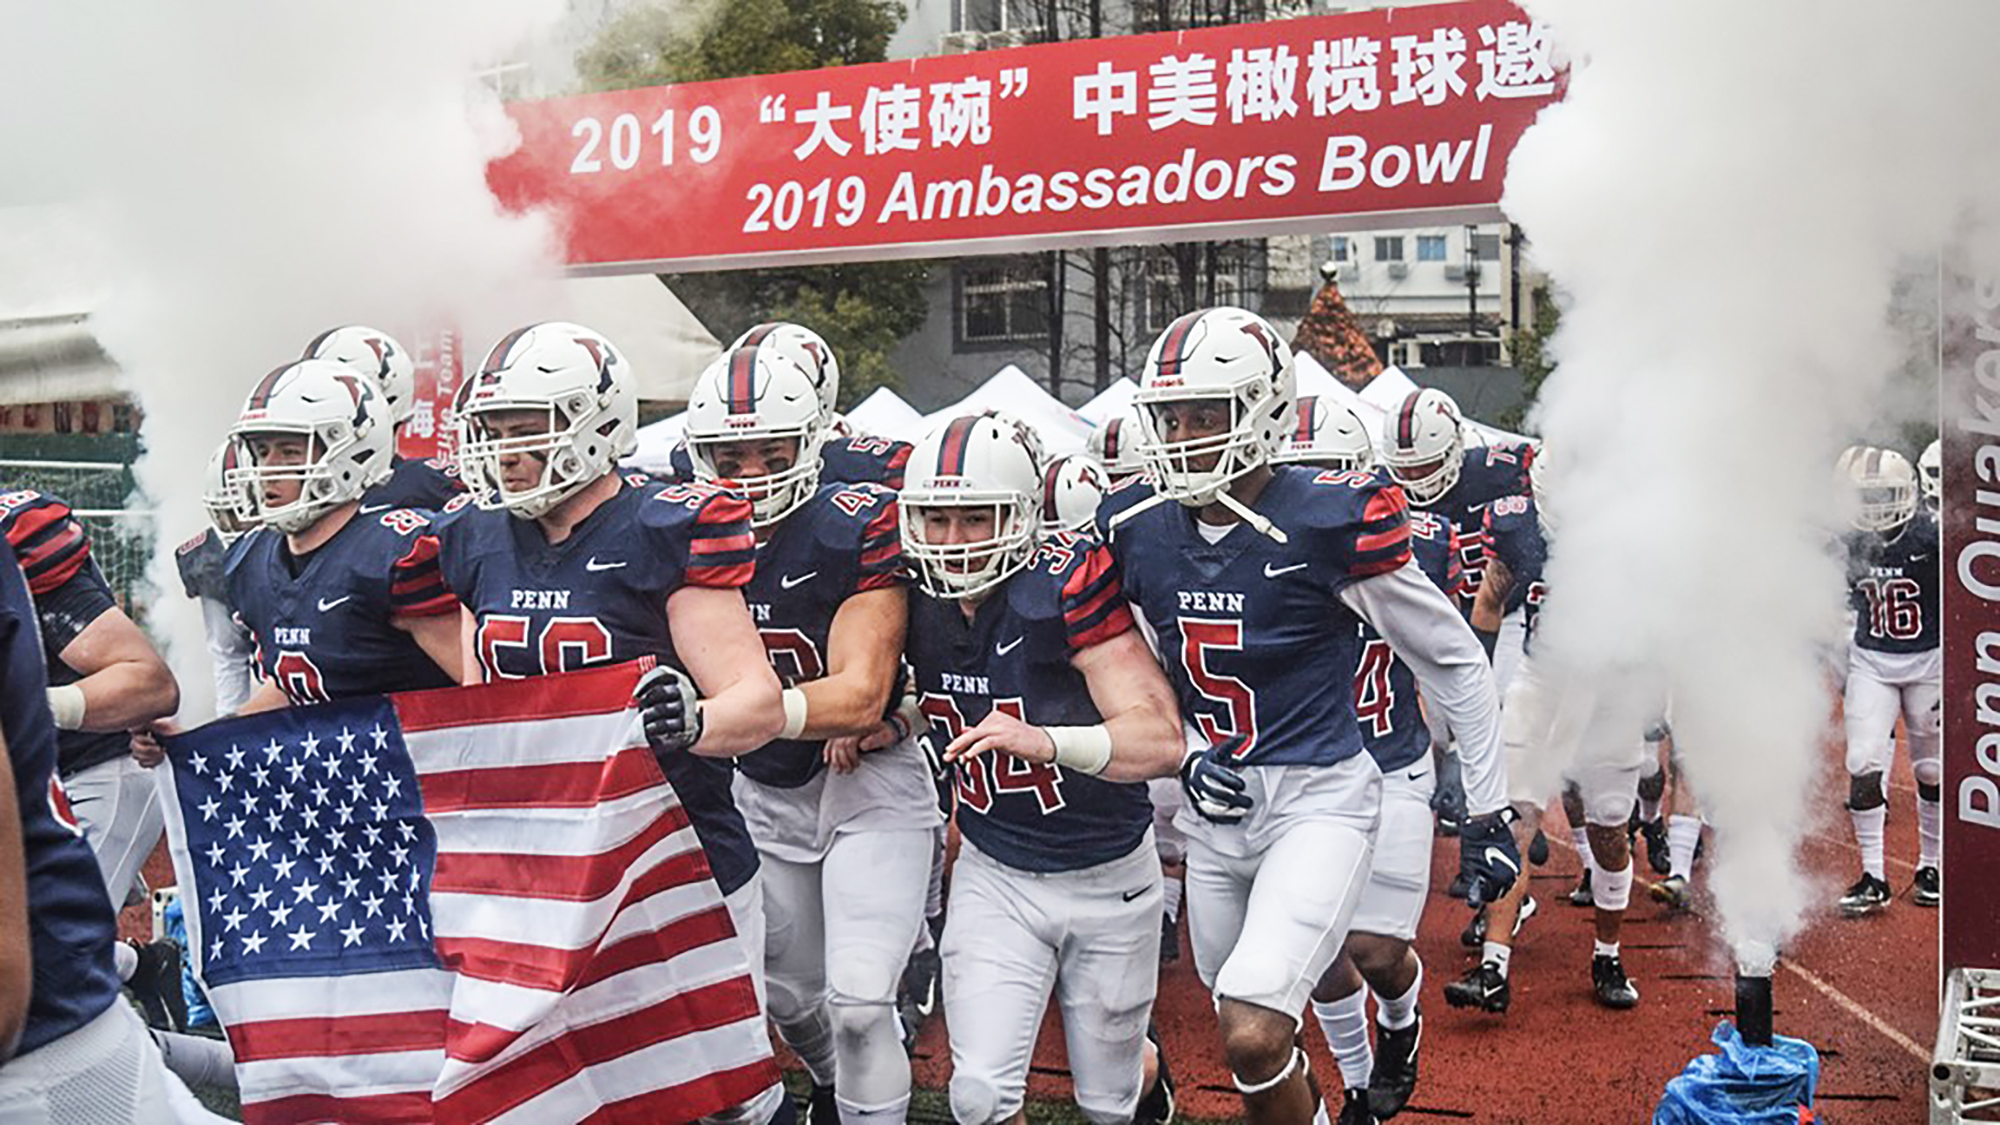 Penn football players take the field for the Penn-China Global Ambassadors Bowl in Shanghai over spring break.